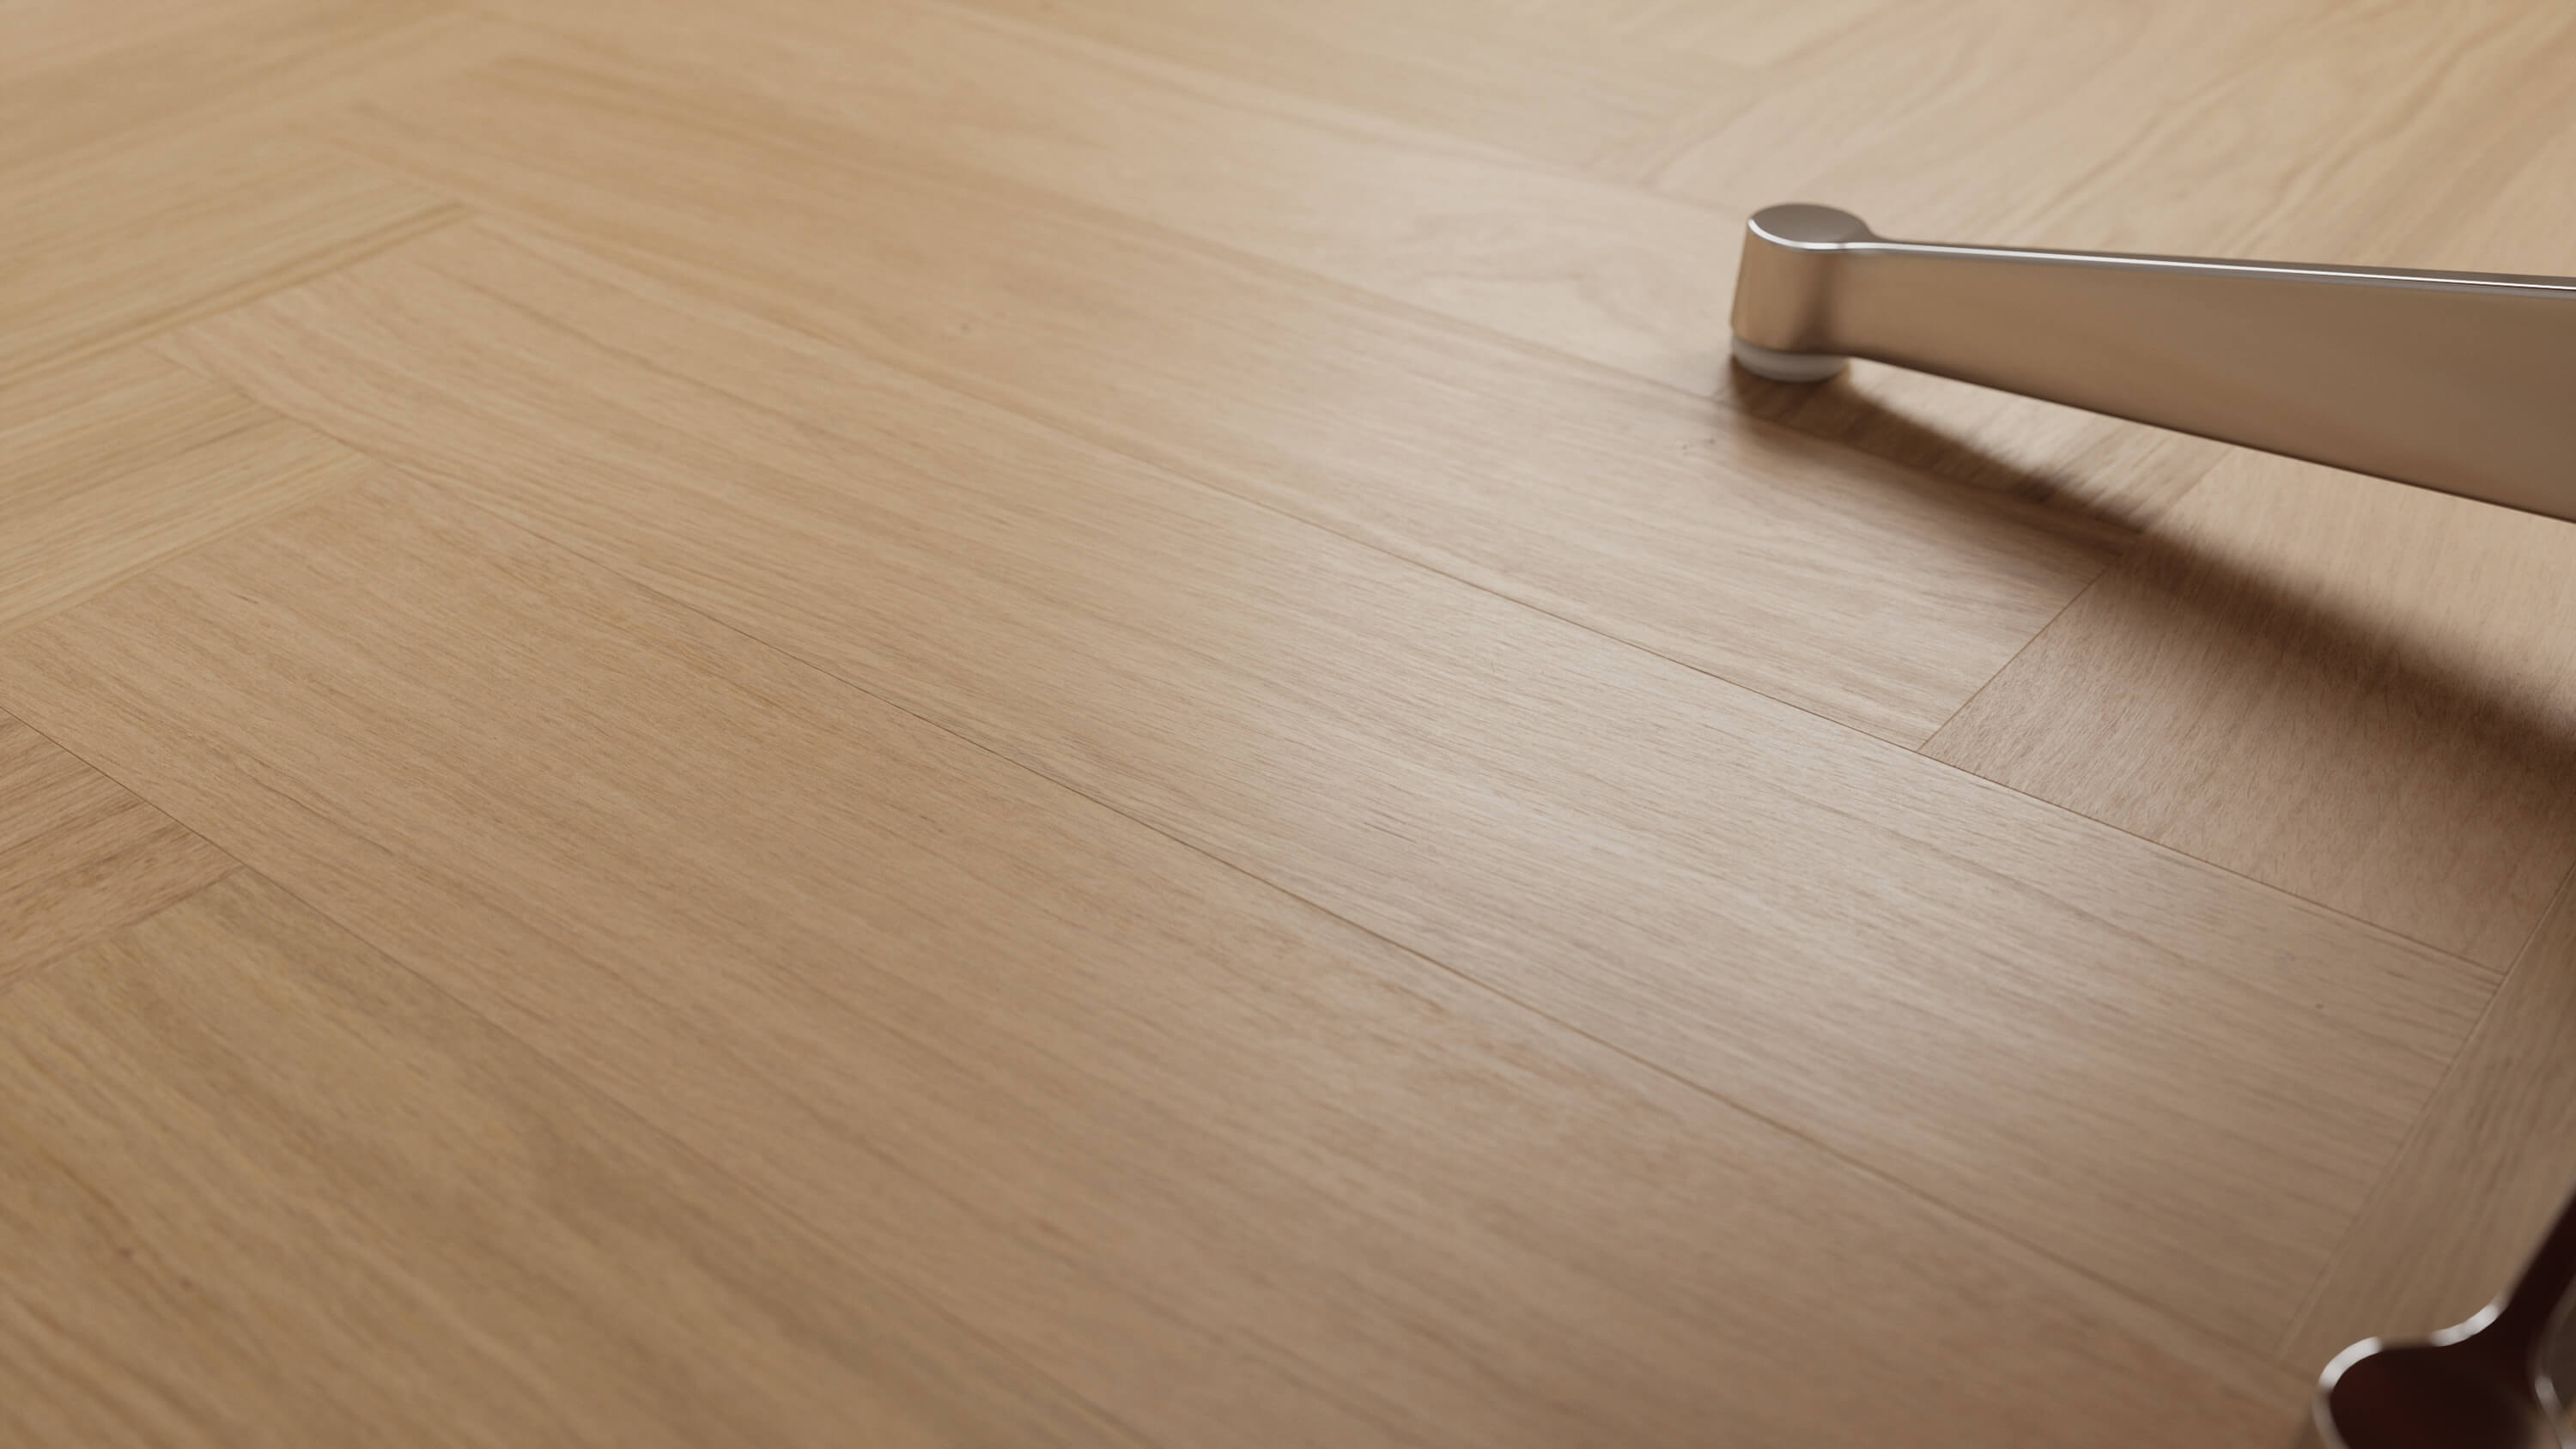 seamless oak wood herringbone floor texture